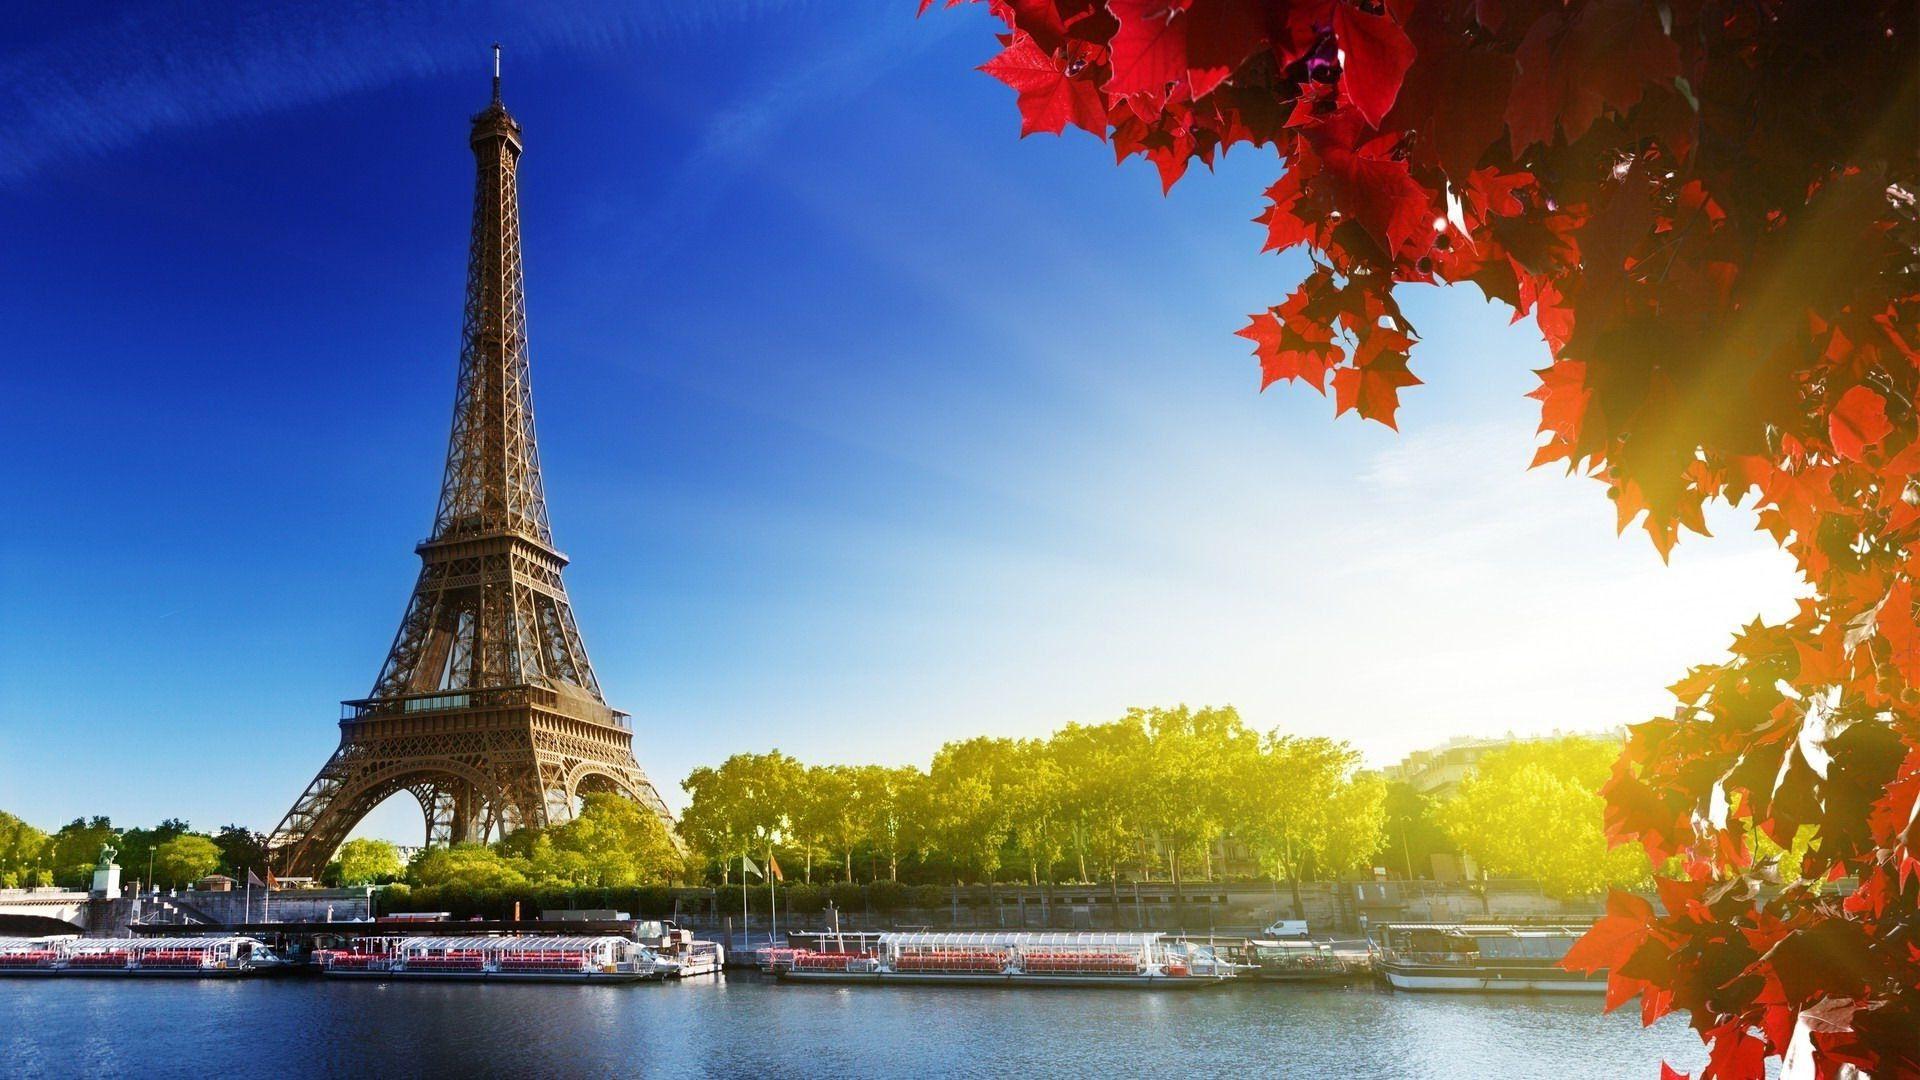 Cute Eiffel Tower Wallpapers - Top Free Cute Eiffel Tower Backgrounds